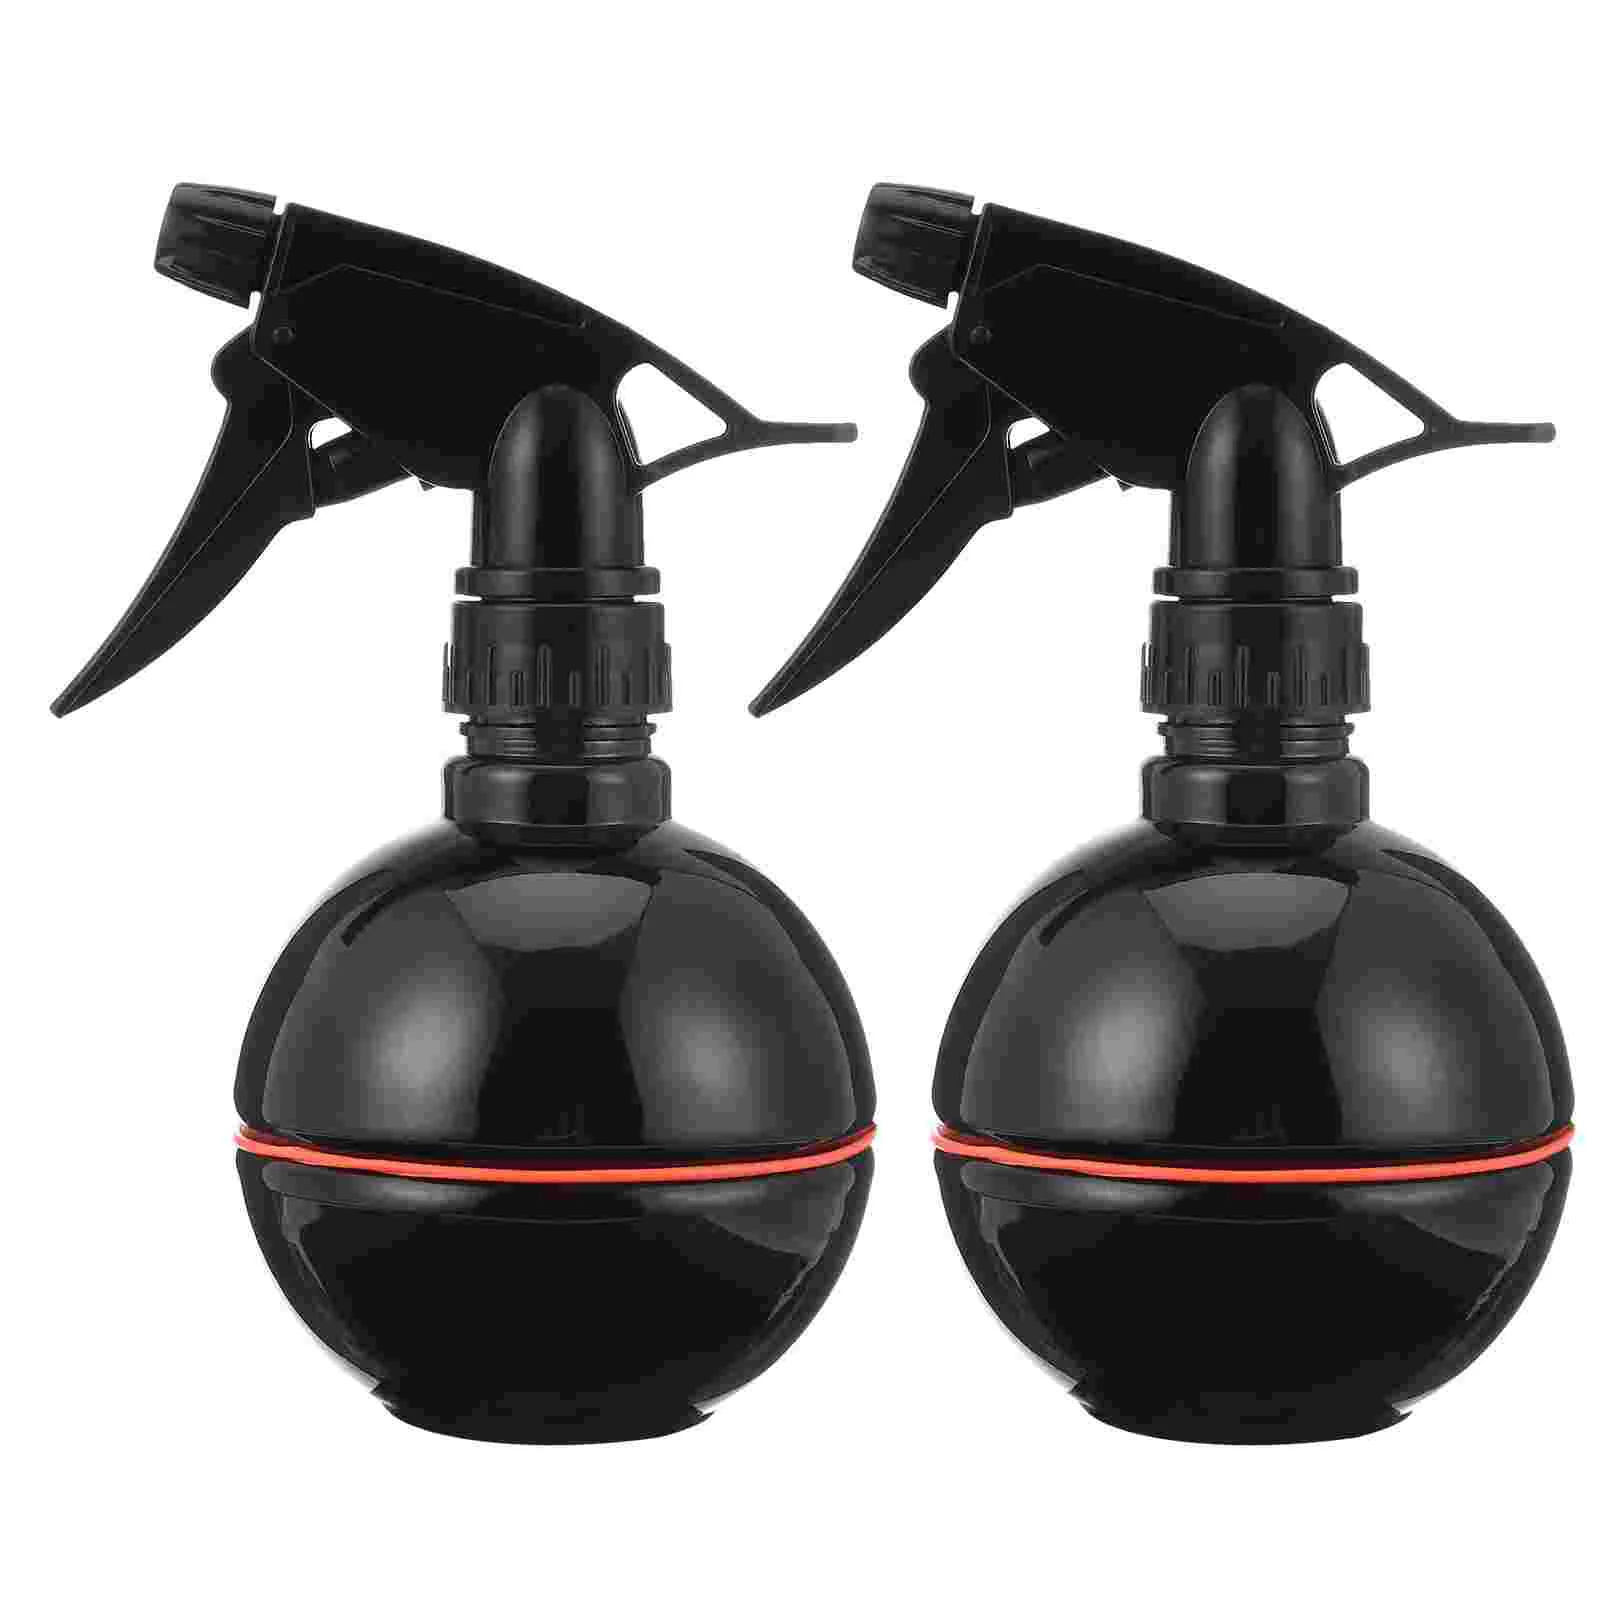 

2pcs Empty Spray Bottle Refillable Spray Bottle For Cleaning Essential Oils Salon Hair Plants Black